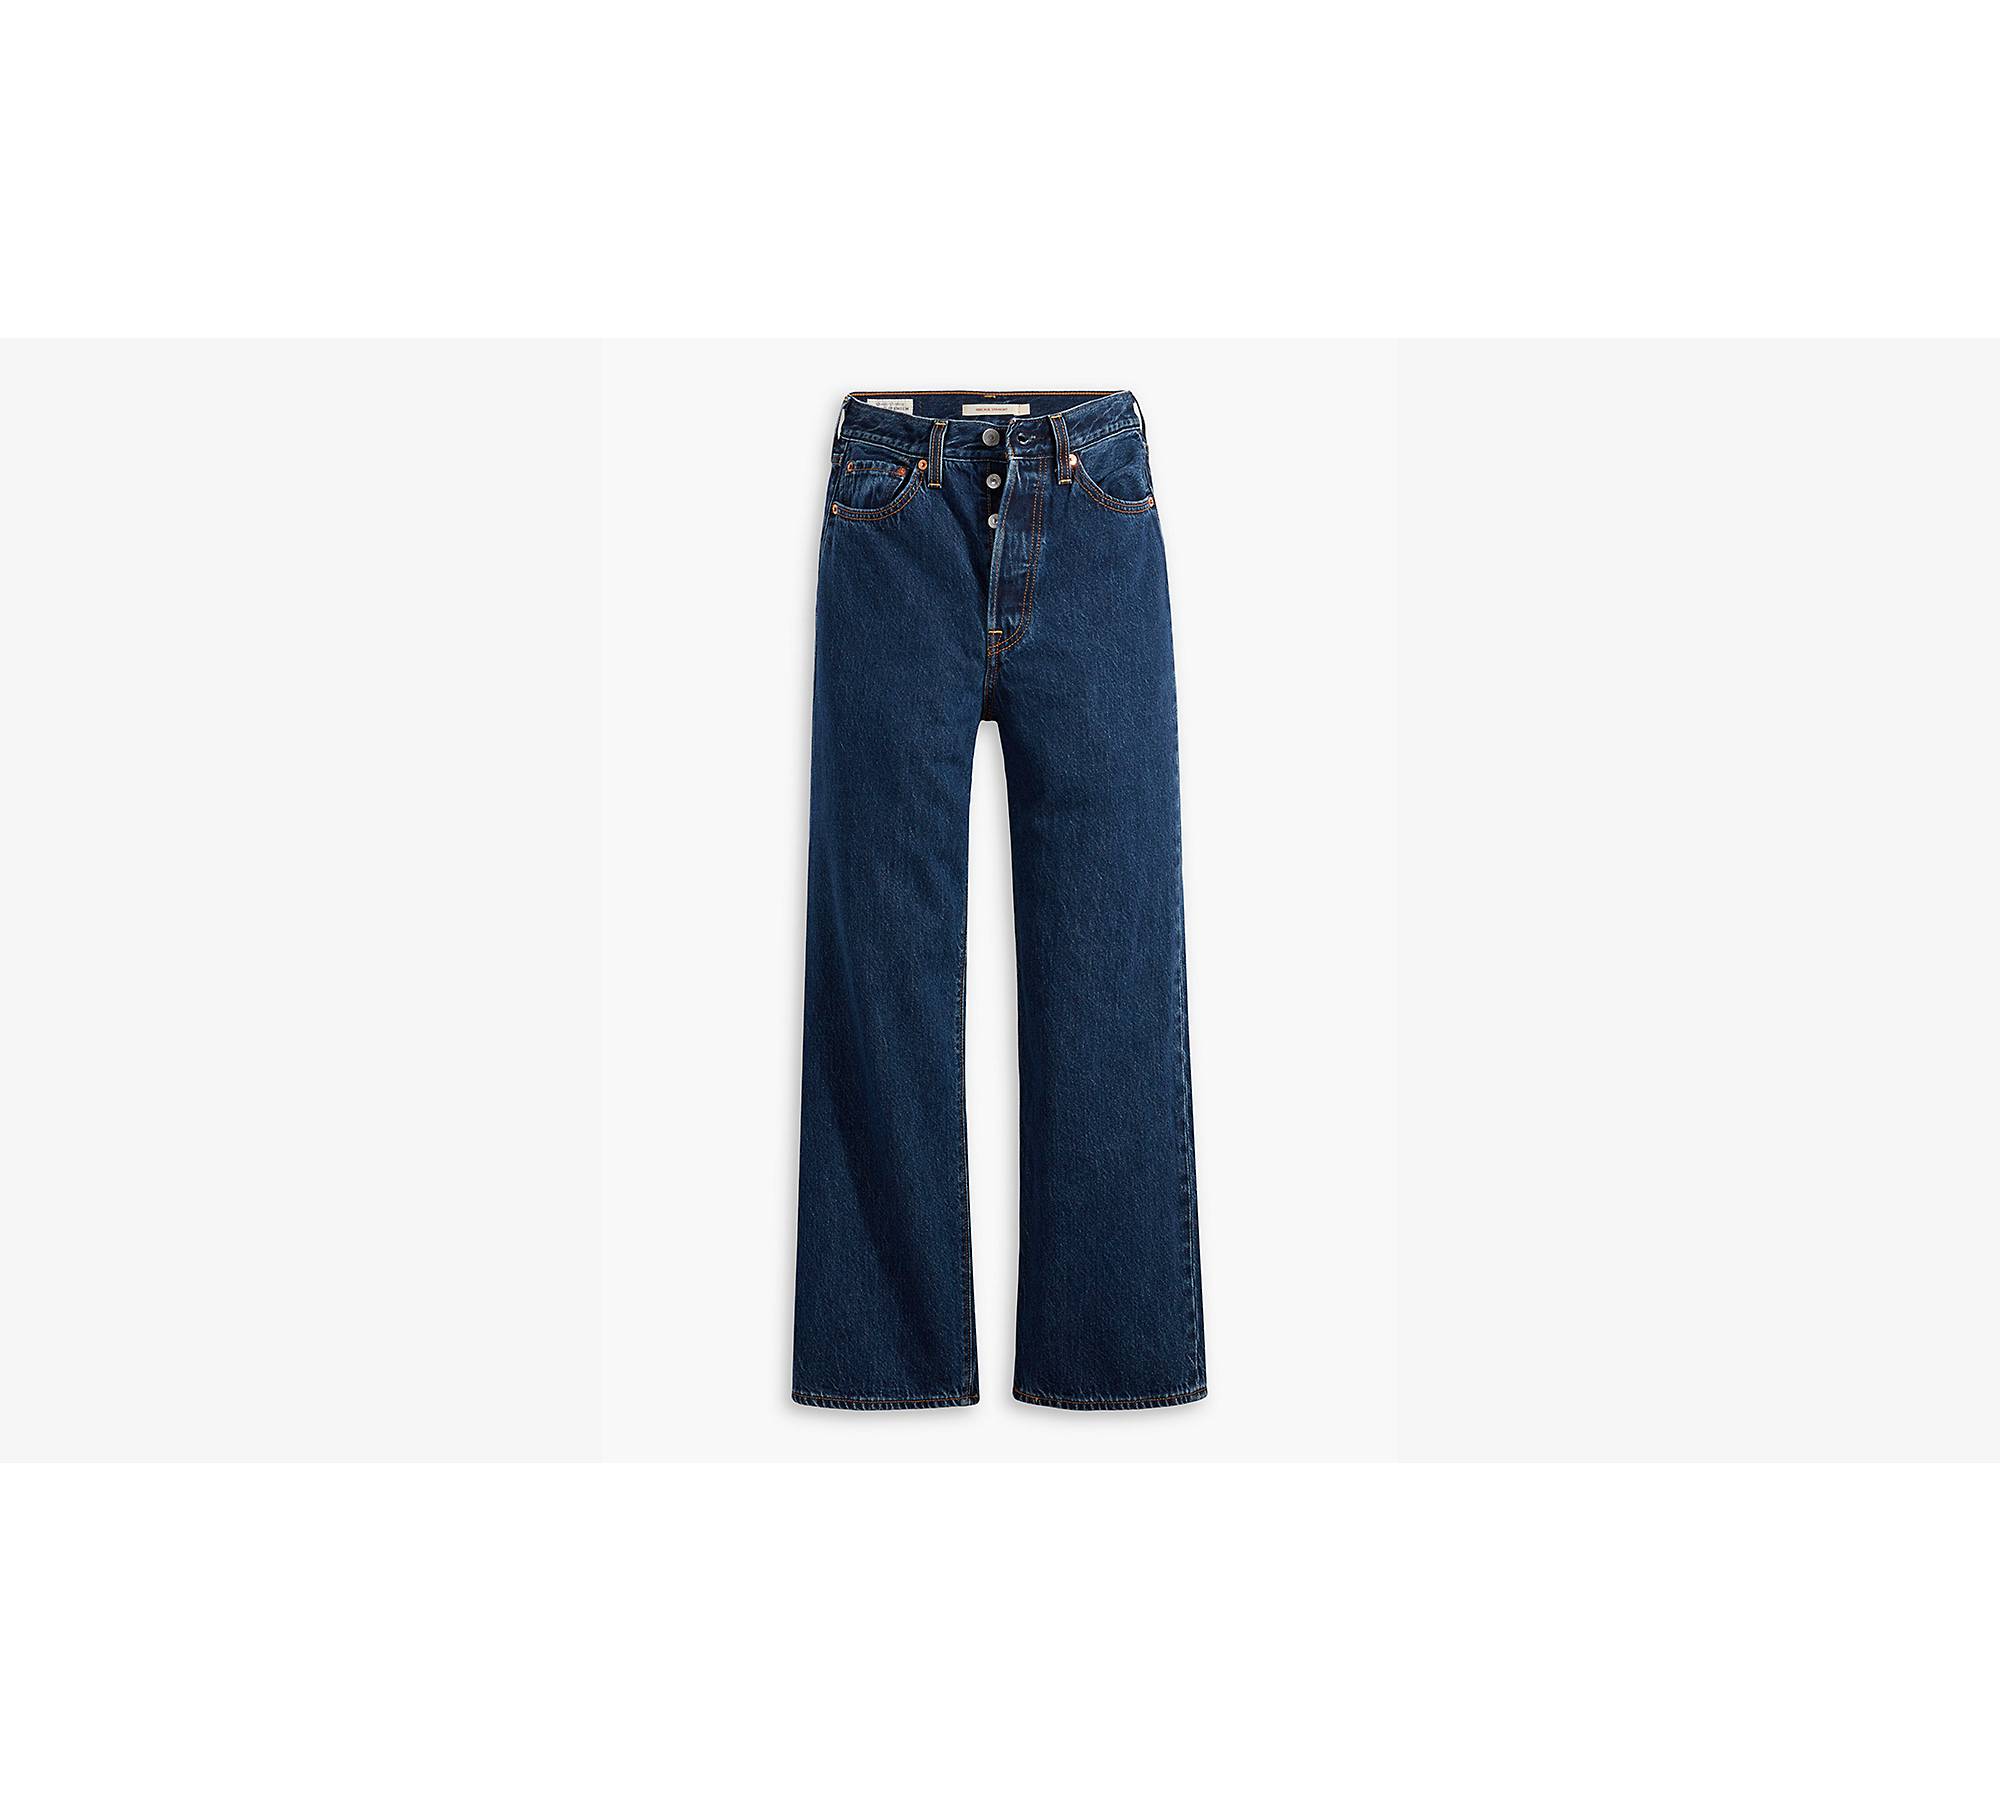 Buy the Womens Blue Dark Wash Stretch Pockets Ankle Lace Denim Capri Jeans  Size 26